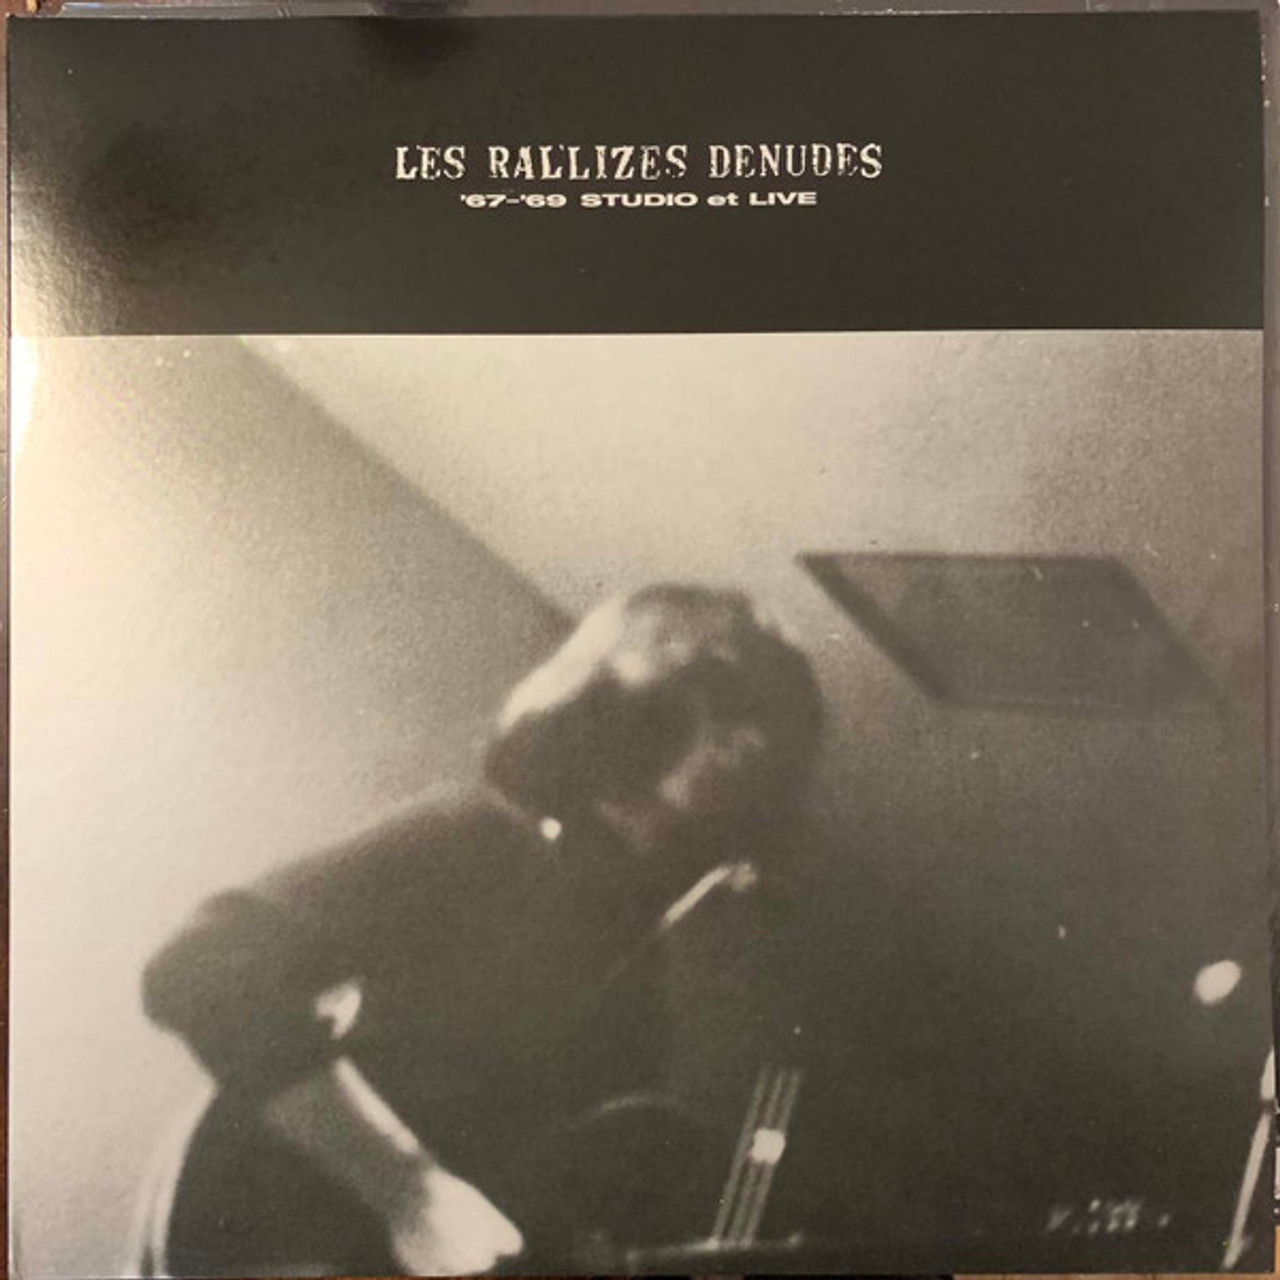 Les Rallizes Denudes 裸のラリーズ レコード 7インチ - 邦楽